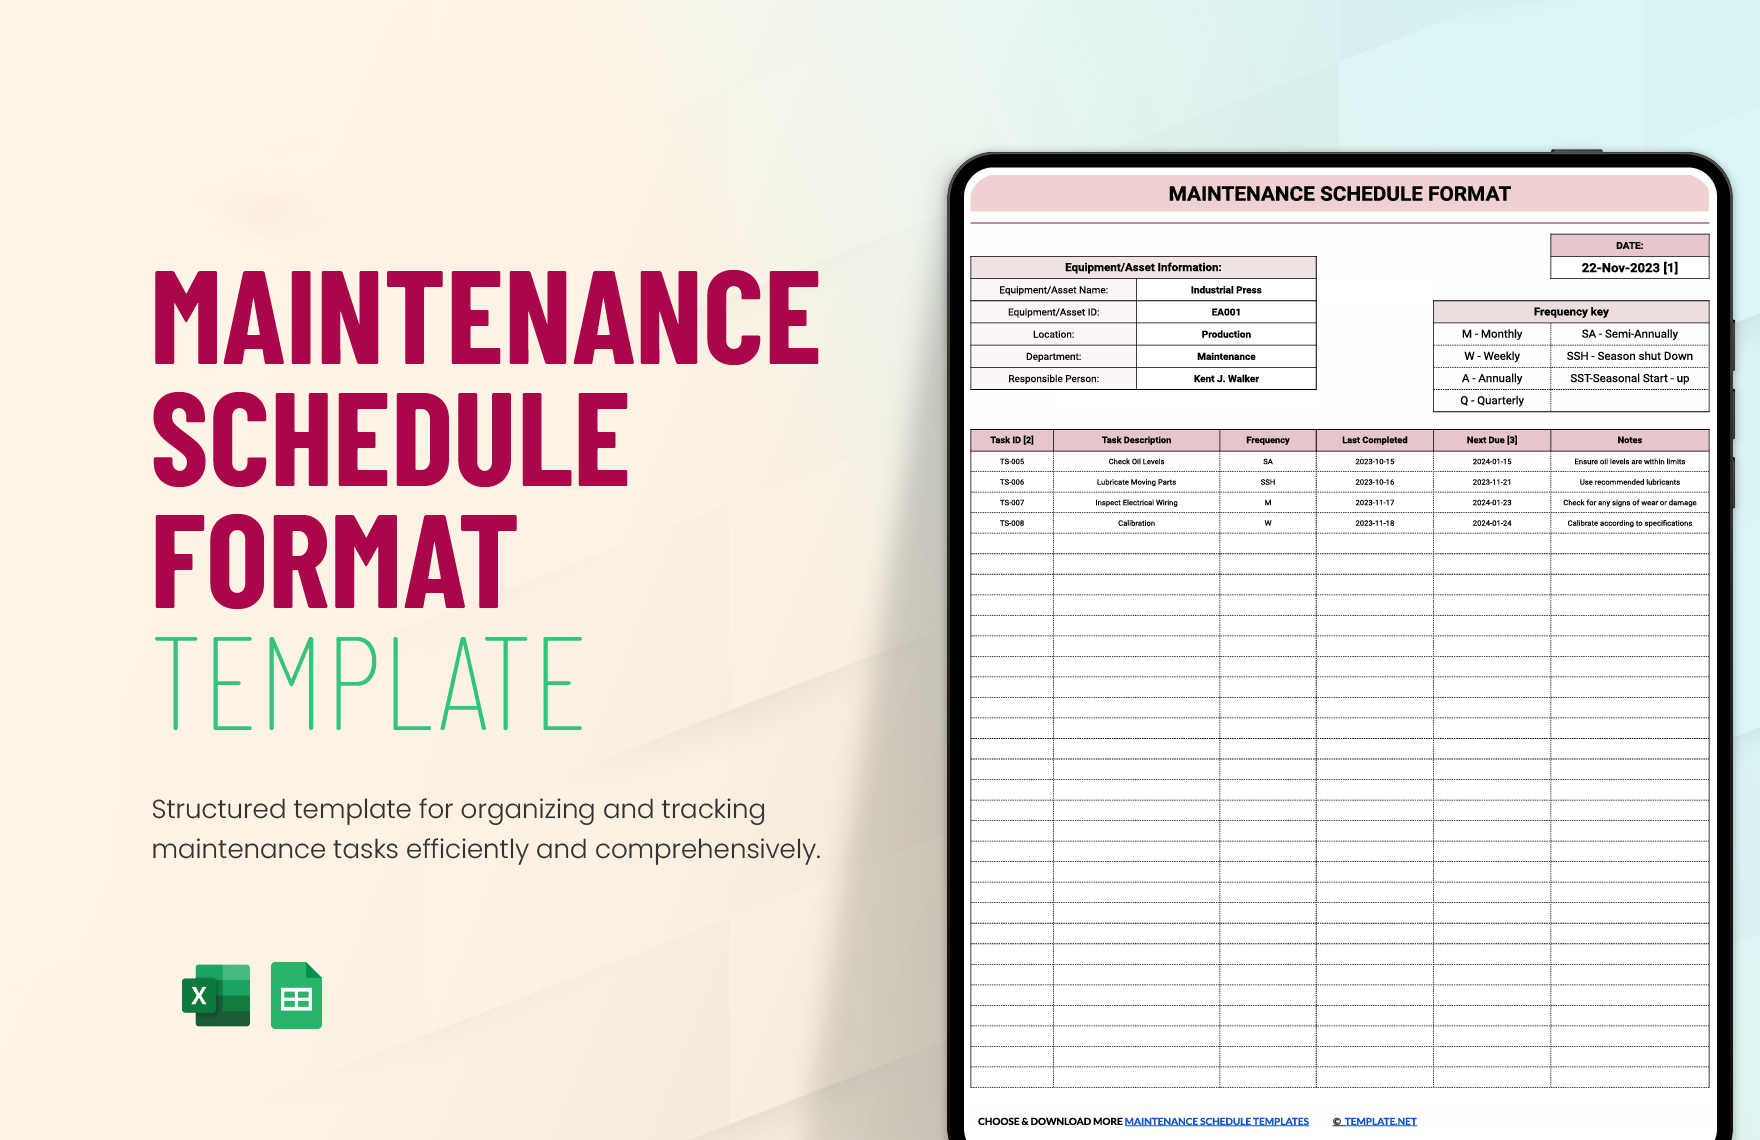 Maintenance Schedule Format Template